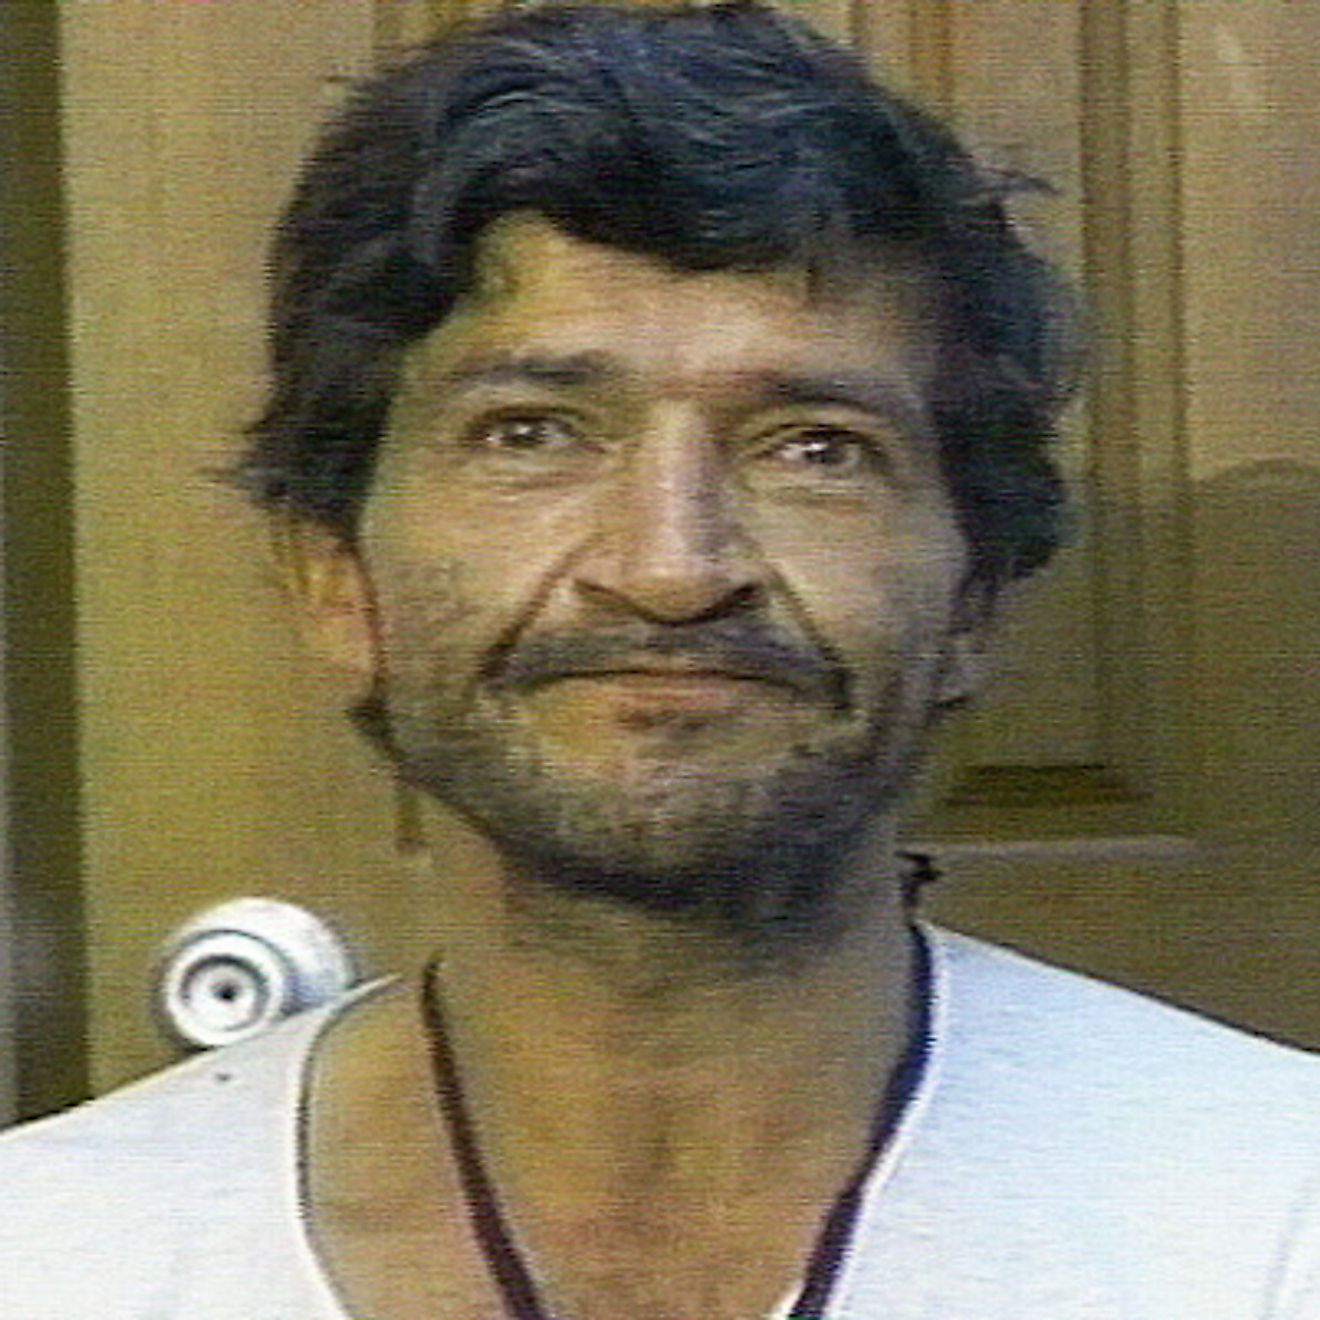 Pedro Lopez. Image source: biography.com